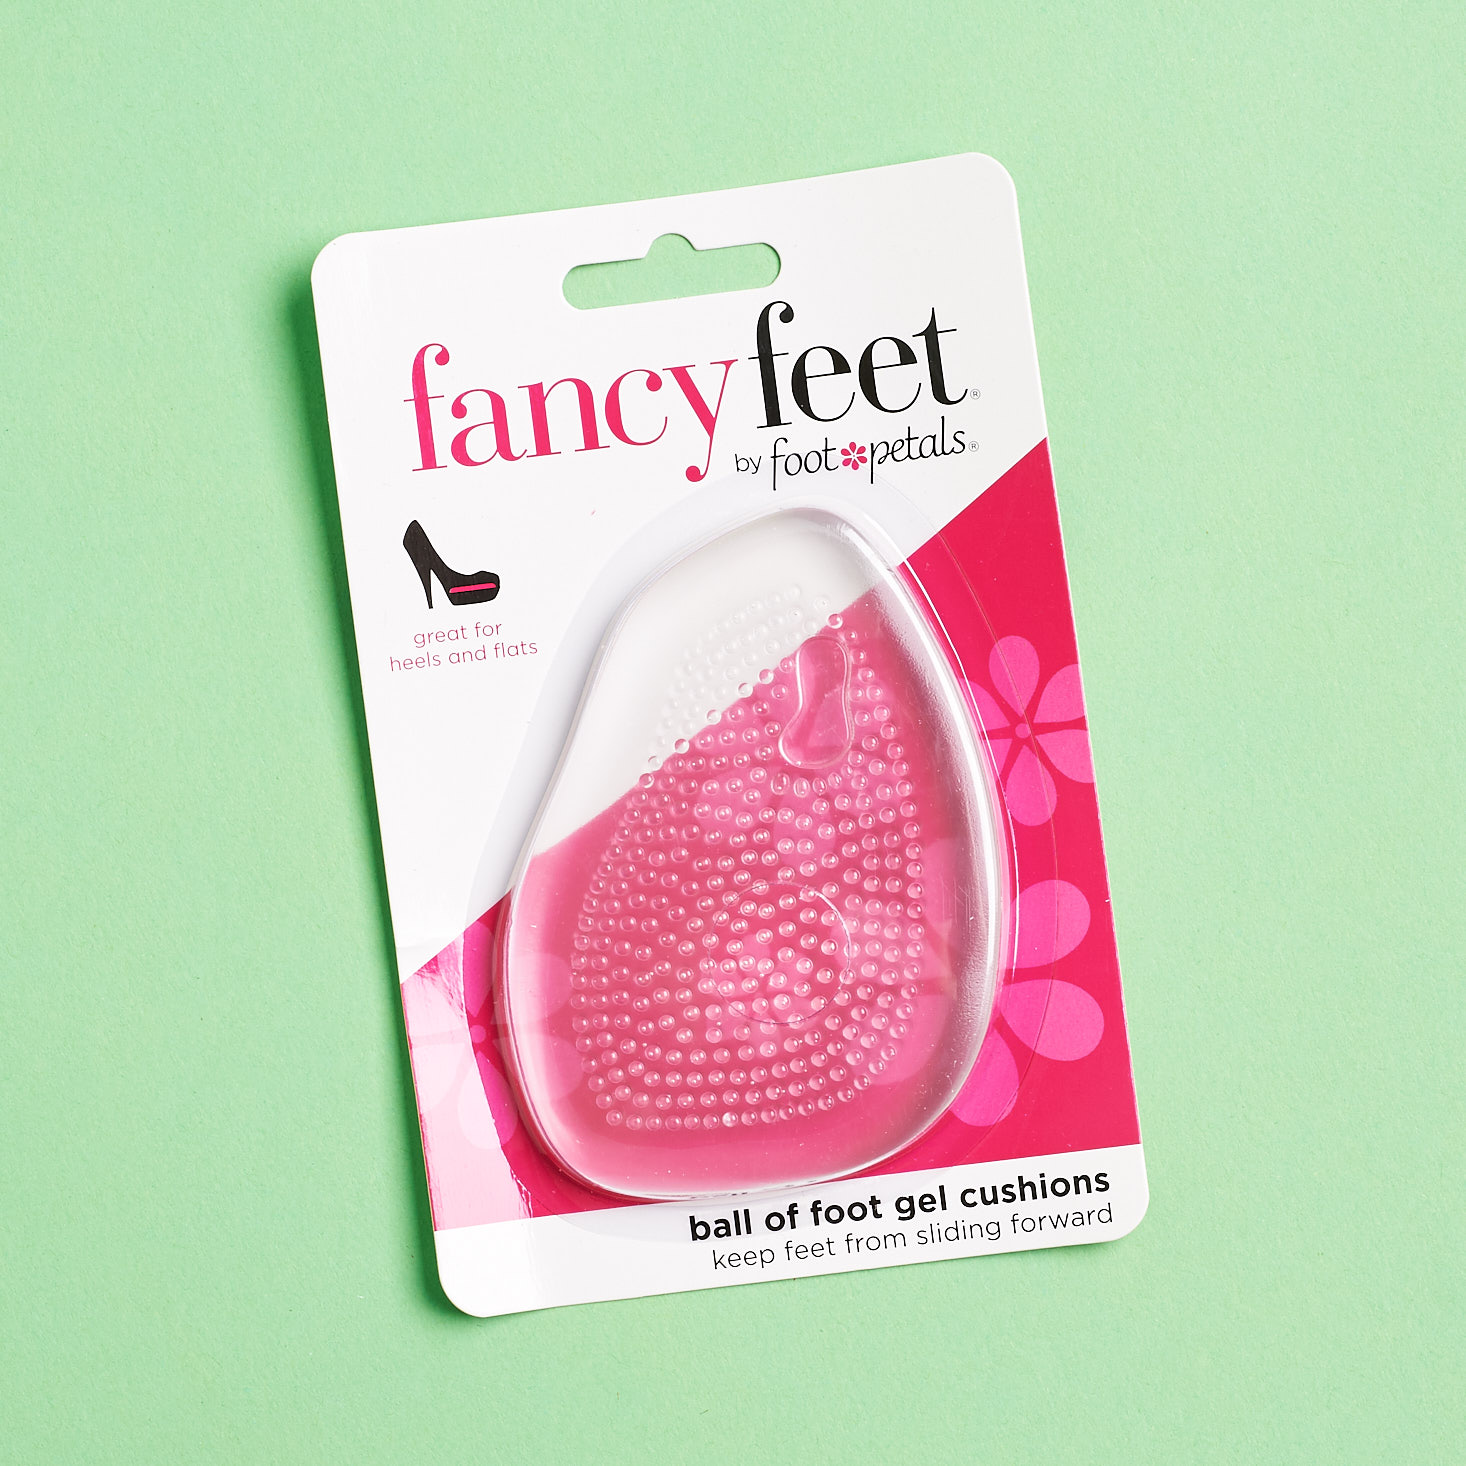 Macys Beauty Box June 2019 beauty subscription box review dancy feet